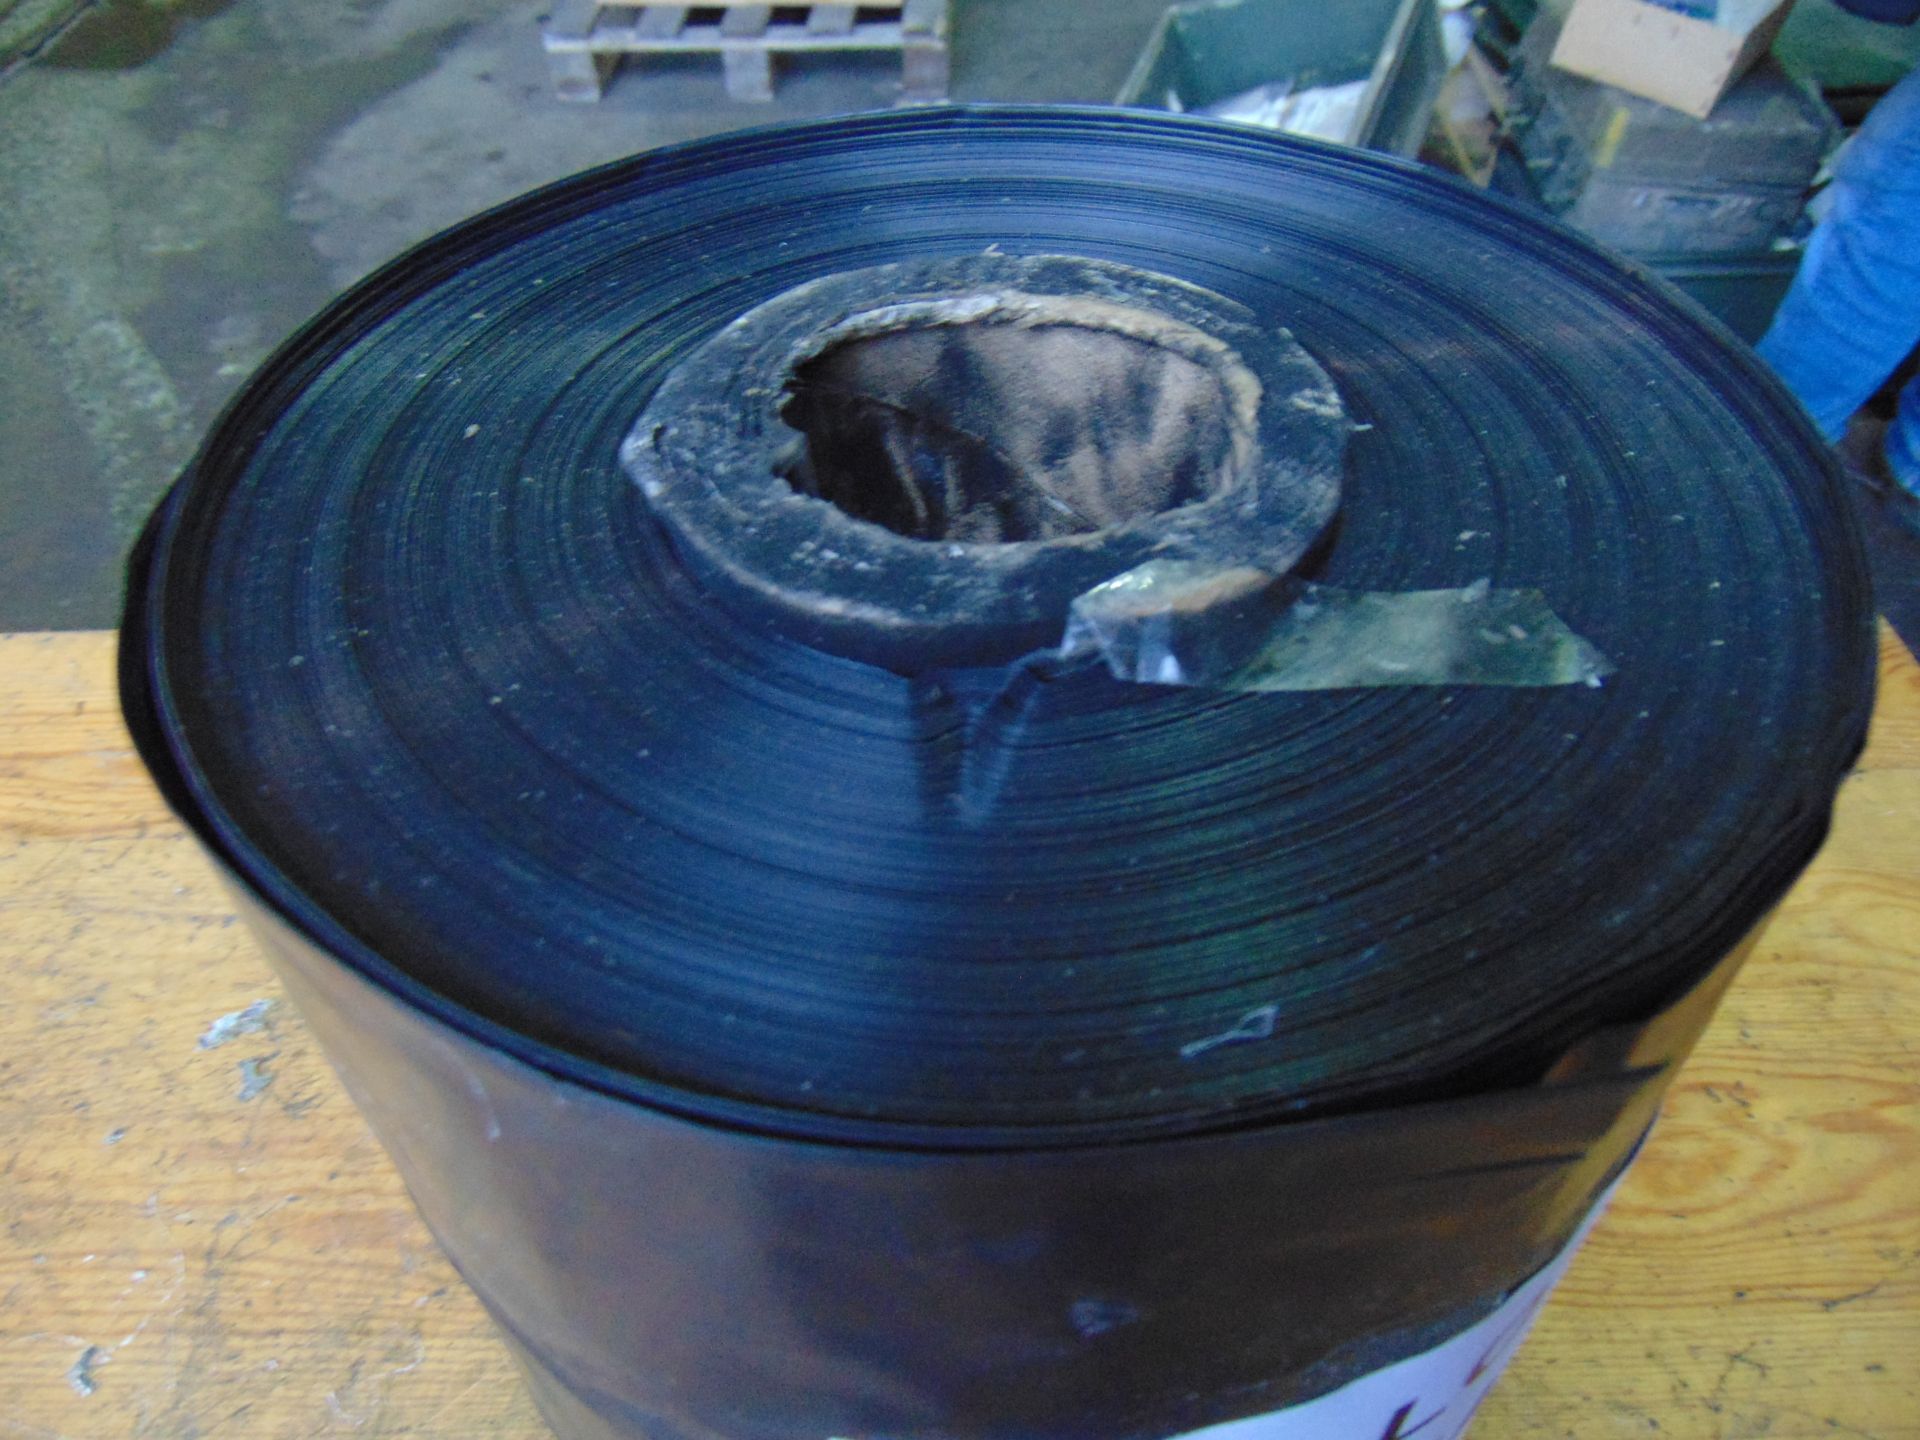 1 x Roll of Black Plastic Tubing - Image 3 of 3